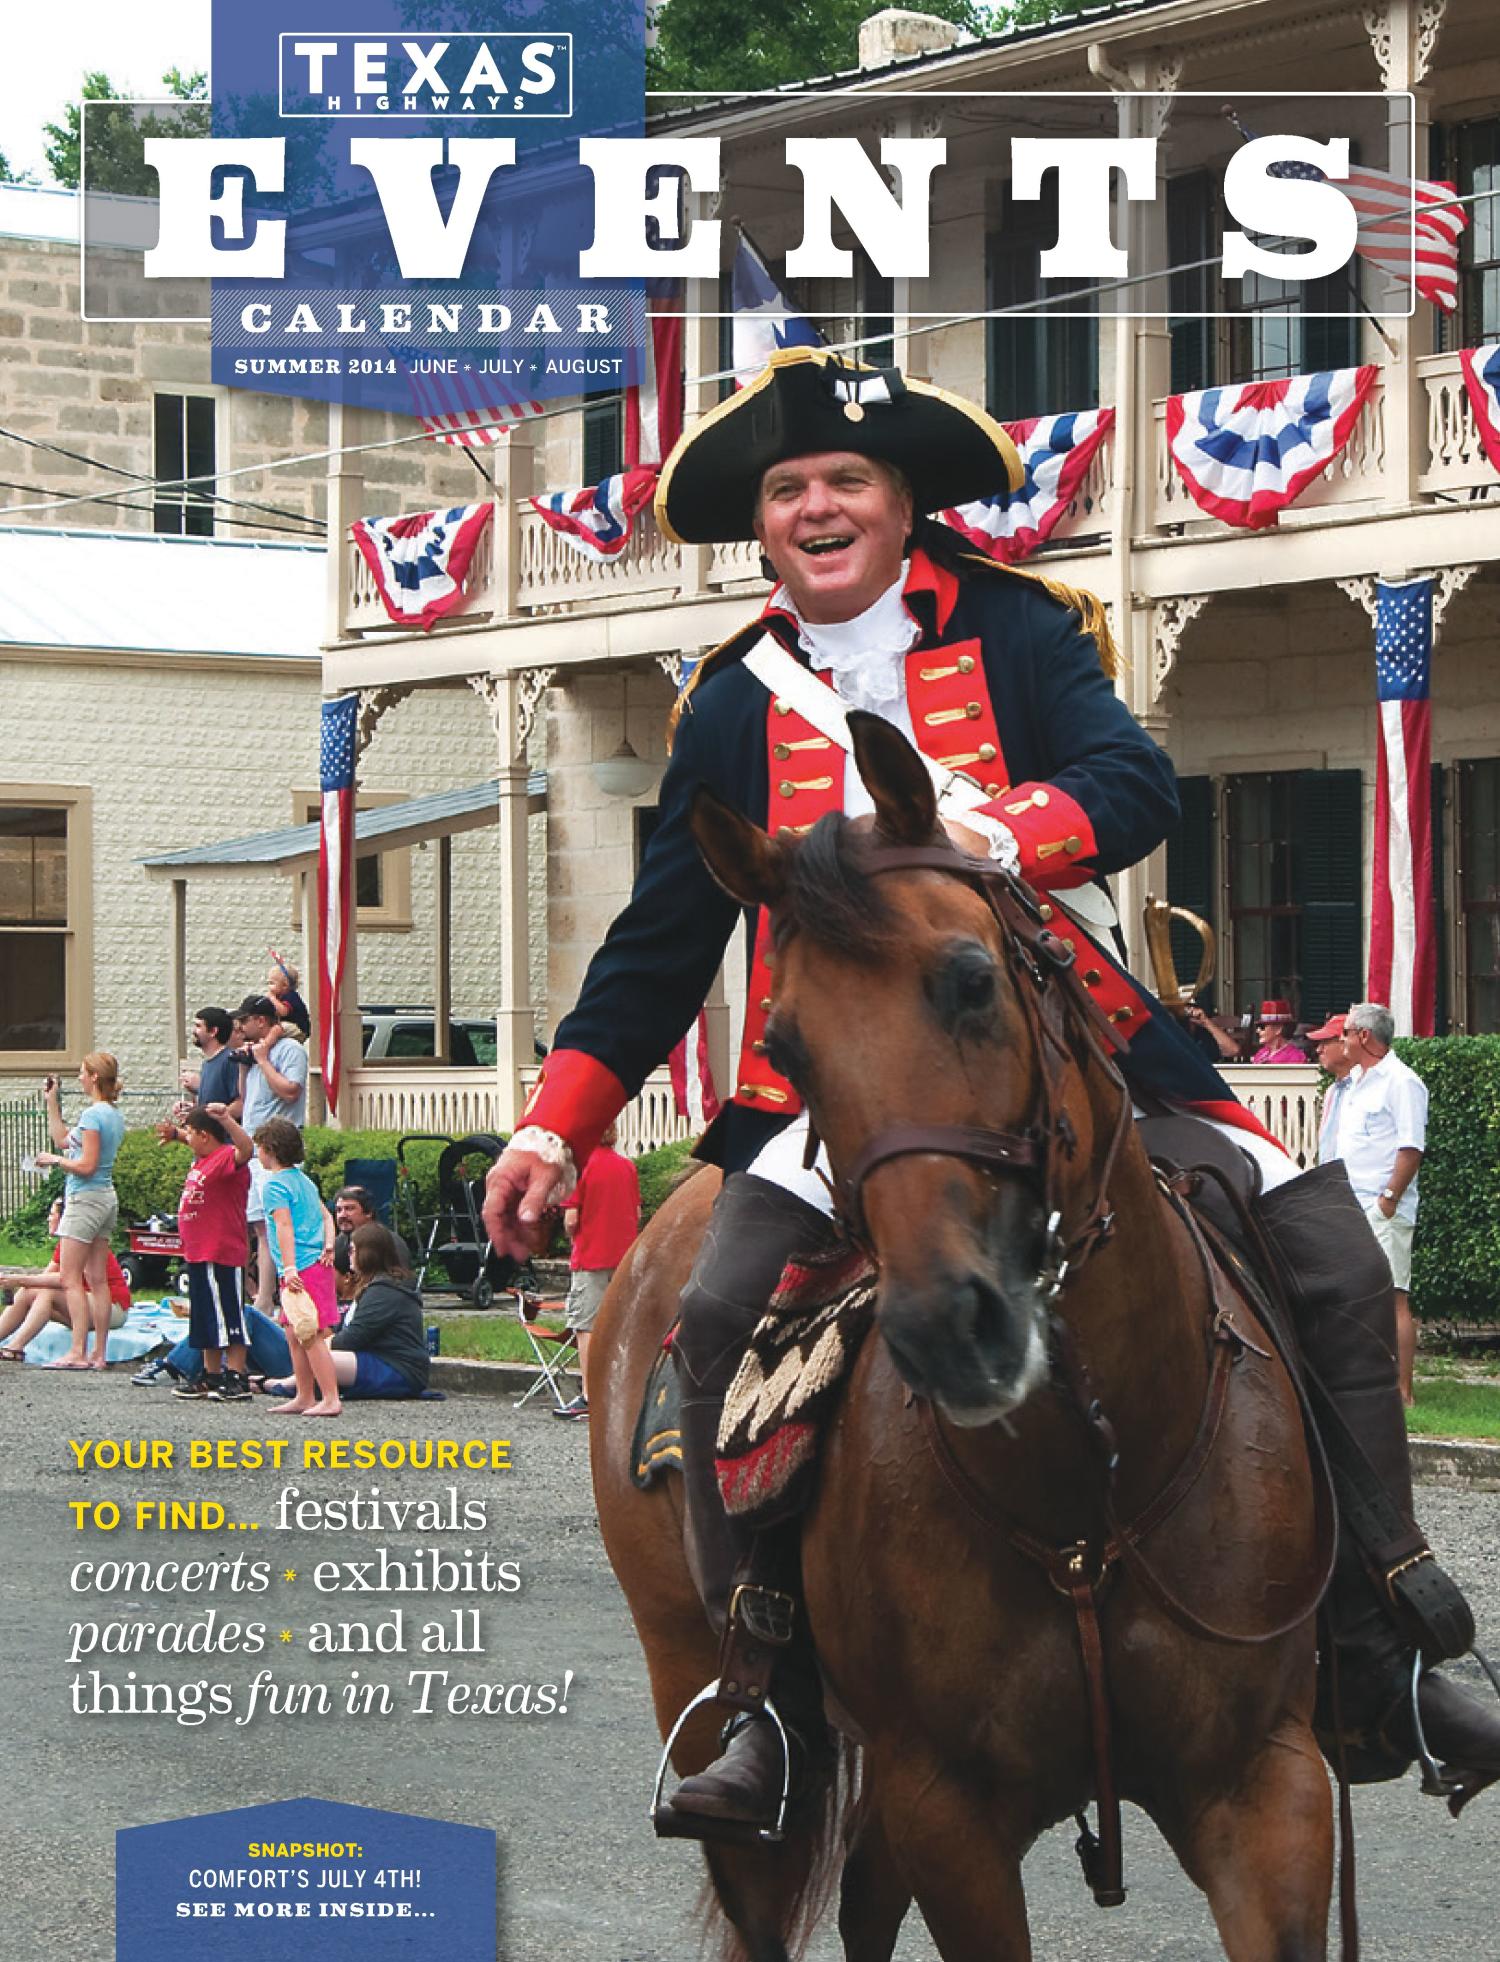 Texas Events Calendar, Summer 2014
                                                
                                                    Front Cover
                                                